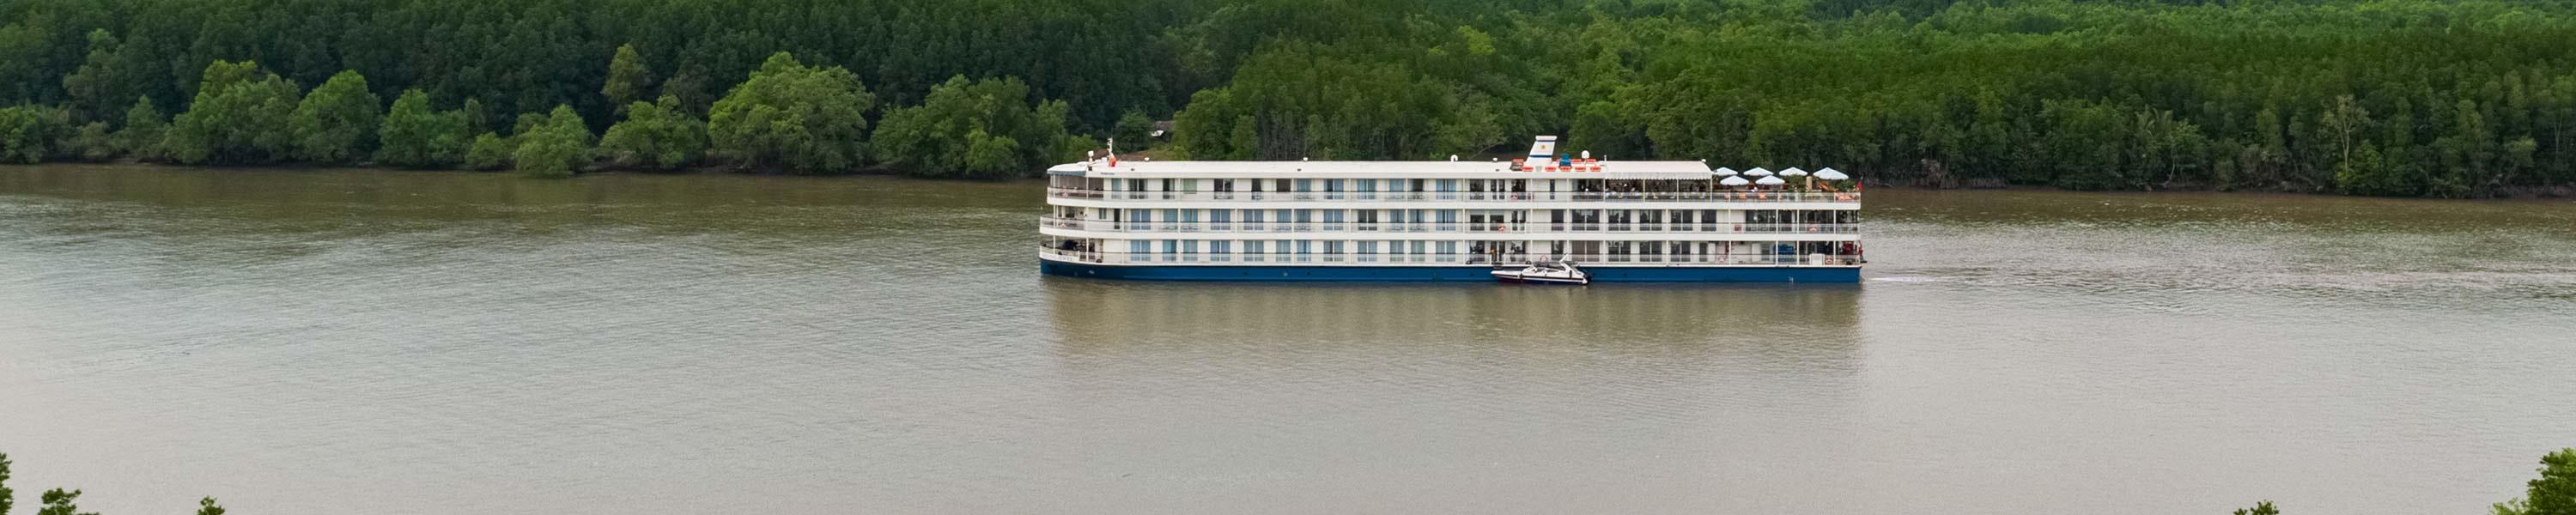 Uniworld River Cruise ship